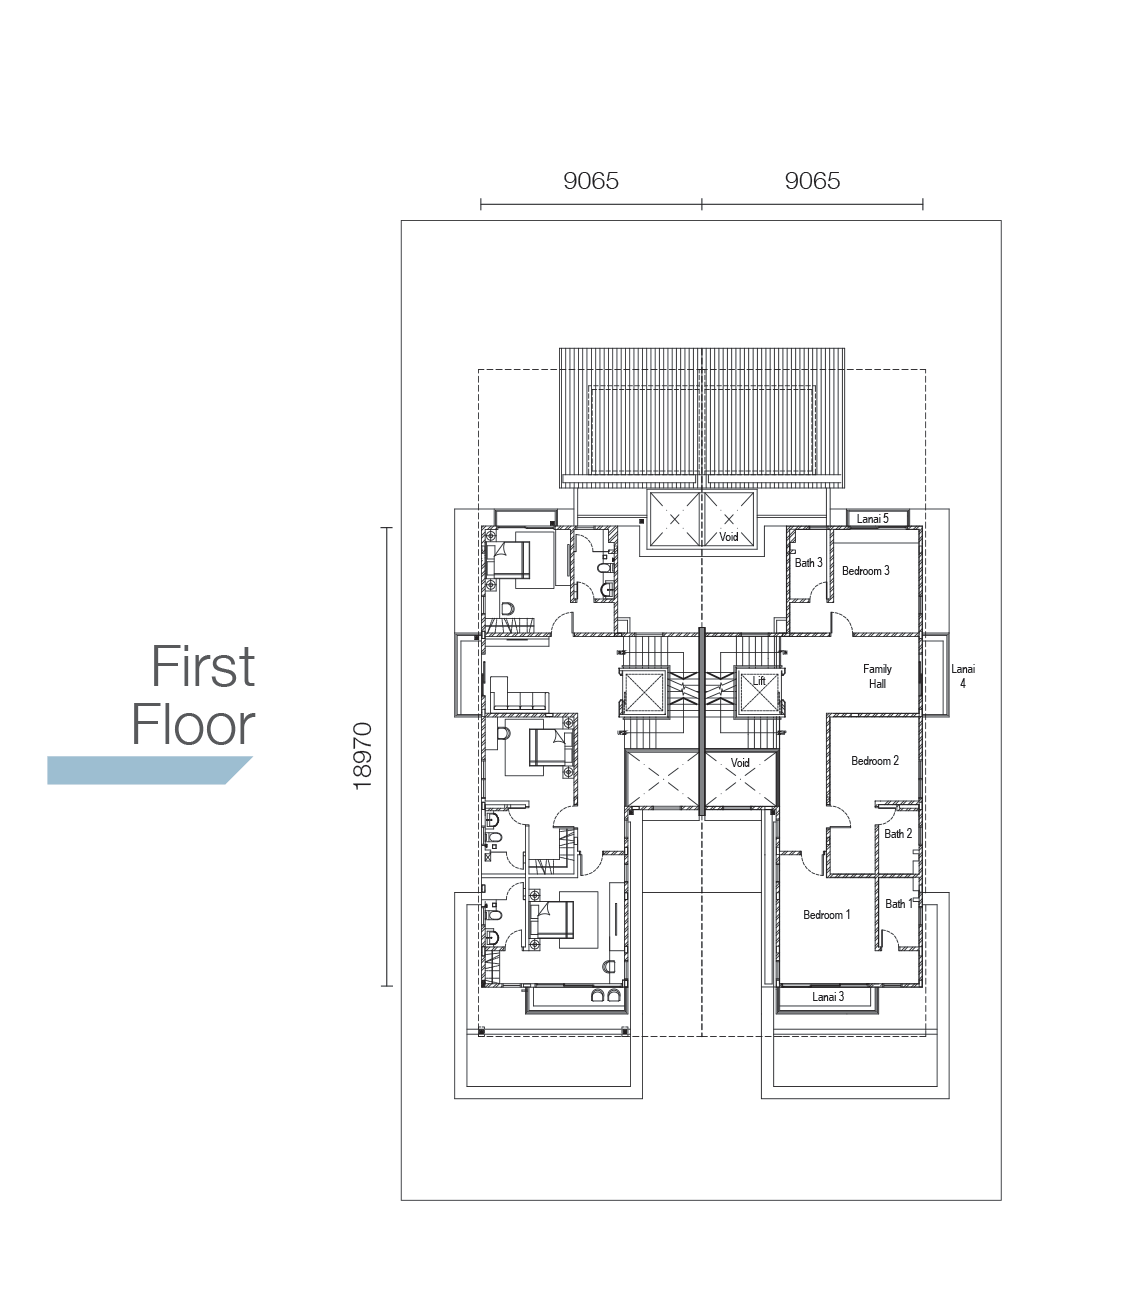 Sierra Hijauan - Type RB6 - First Floor Layout Plan